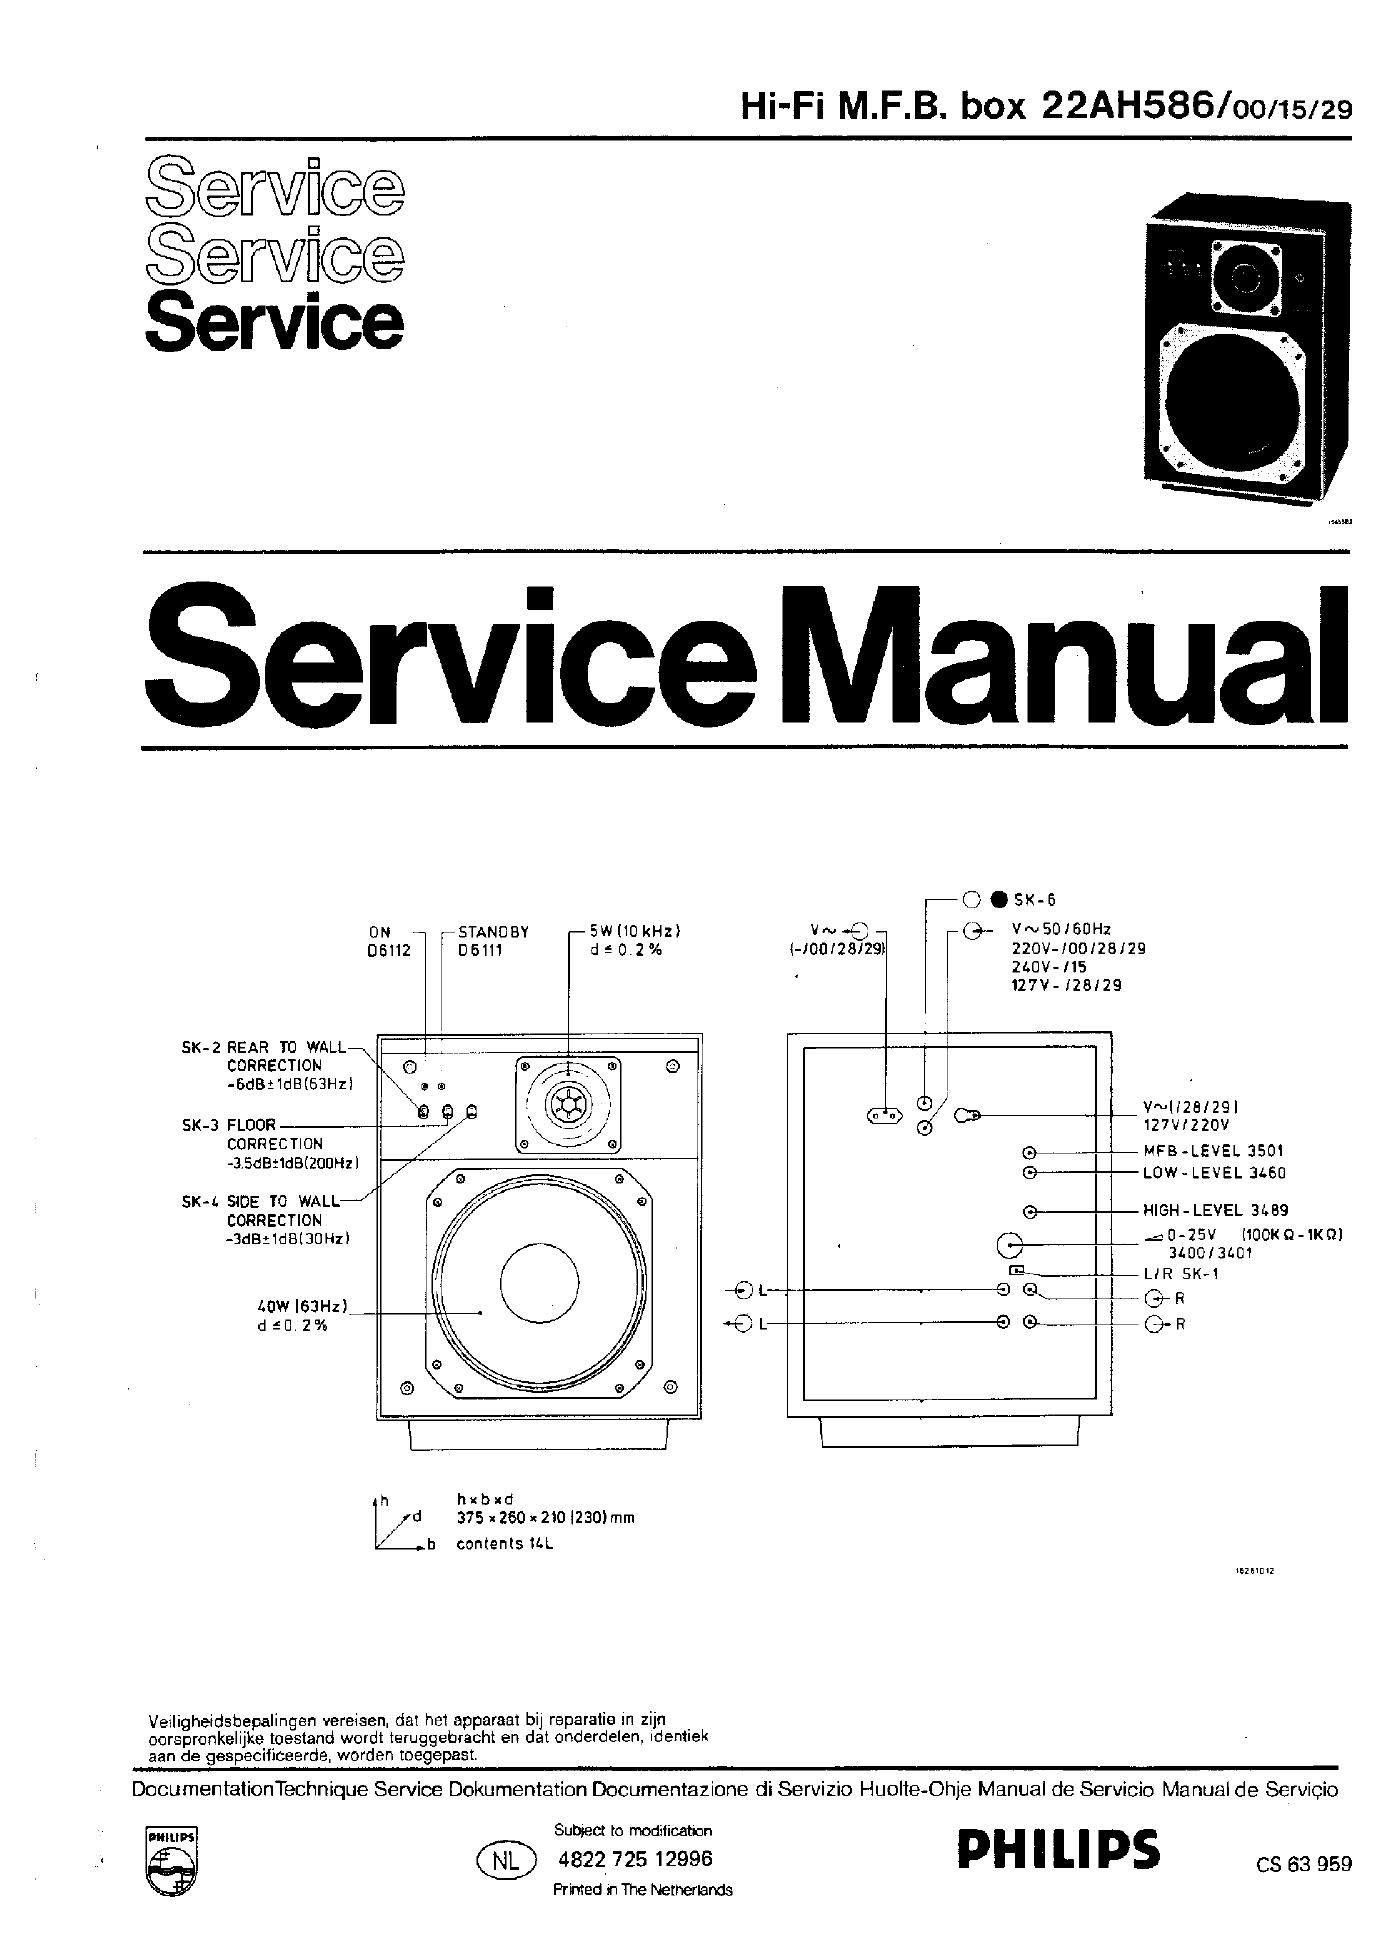 philips 22 ah 586 service manual